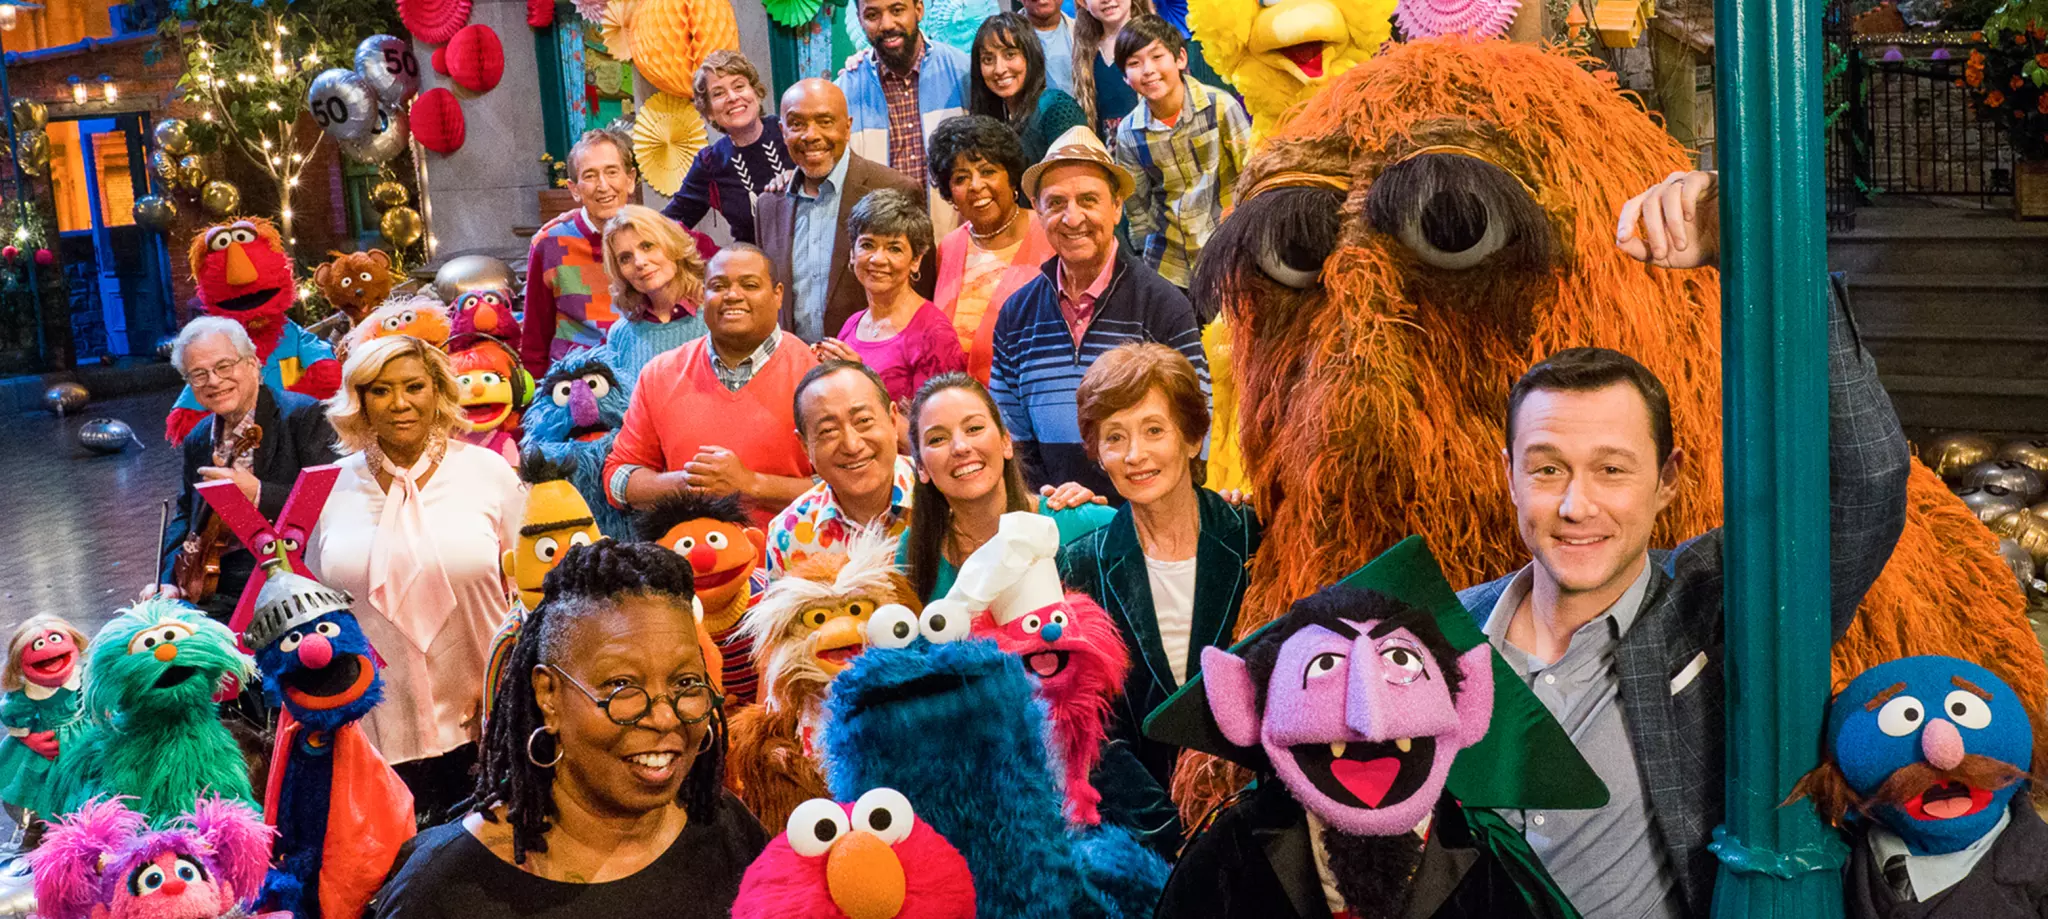 The 50th anniversary cast of Sesame Street